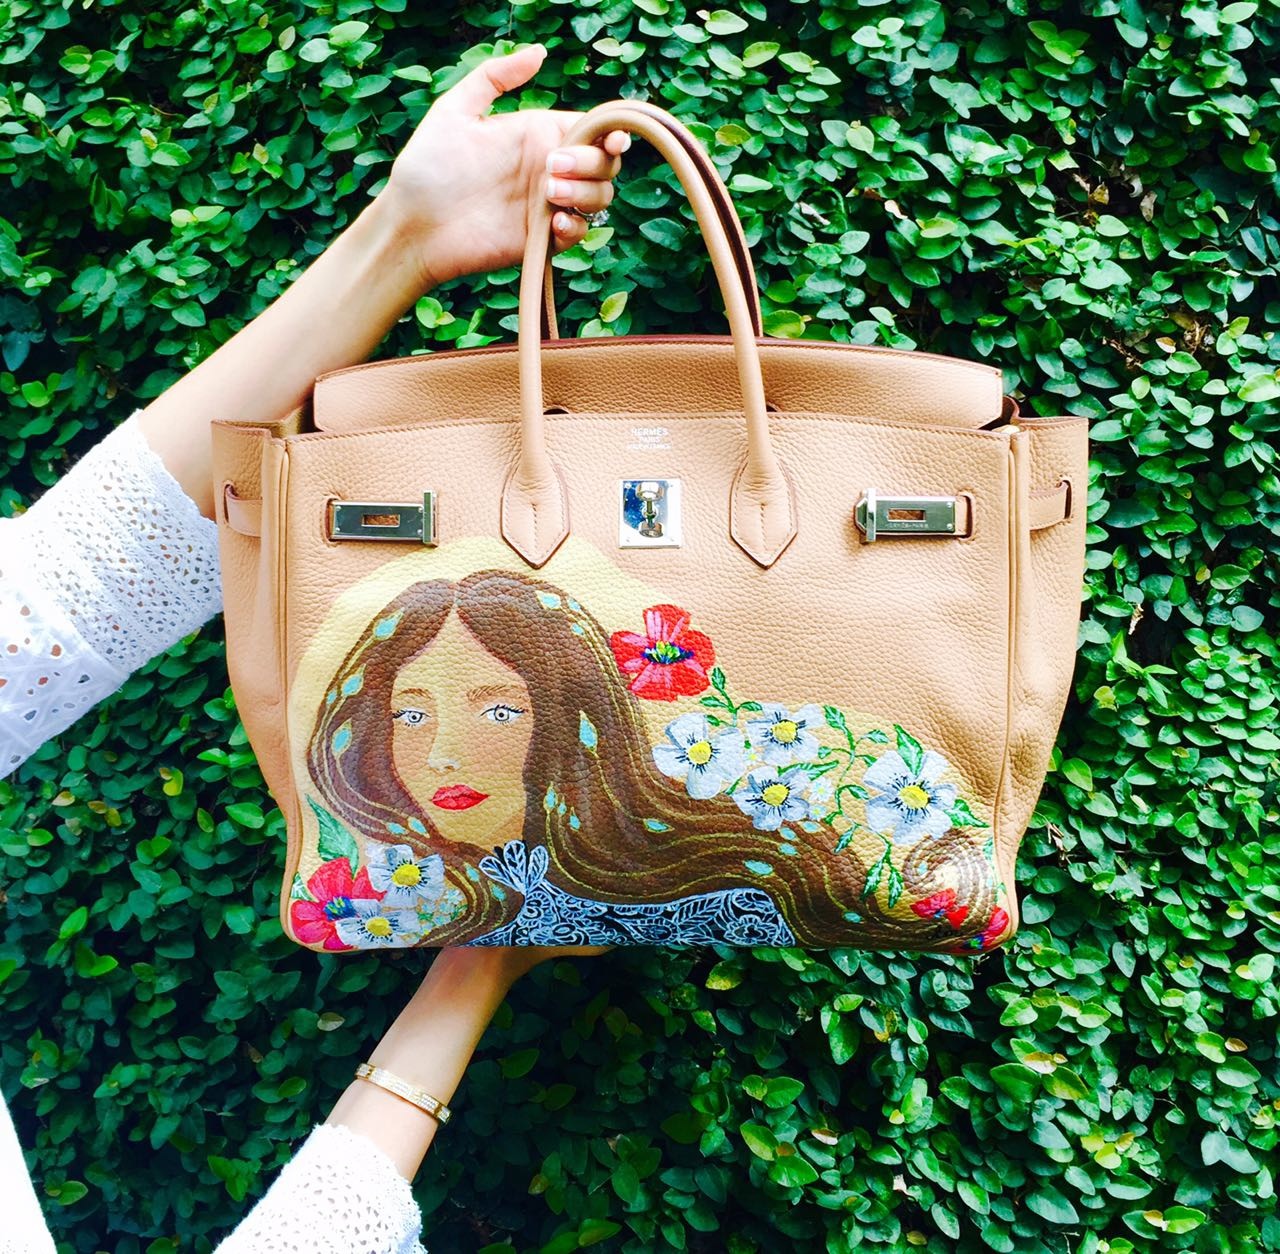 Heart Evangelista paints on Jinkee Pacquiao's Hermès Kelly bag